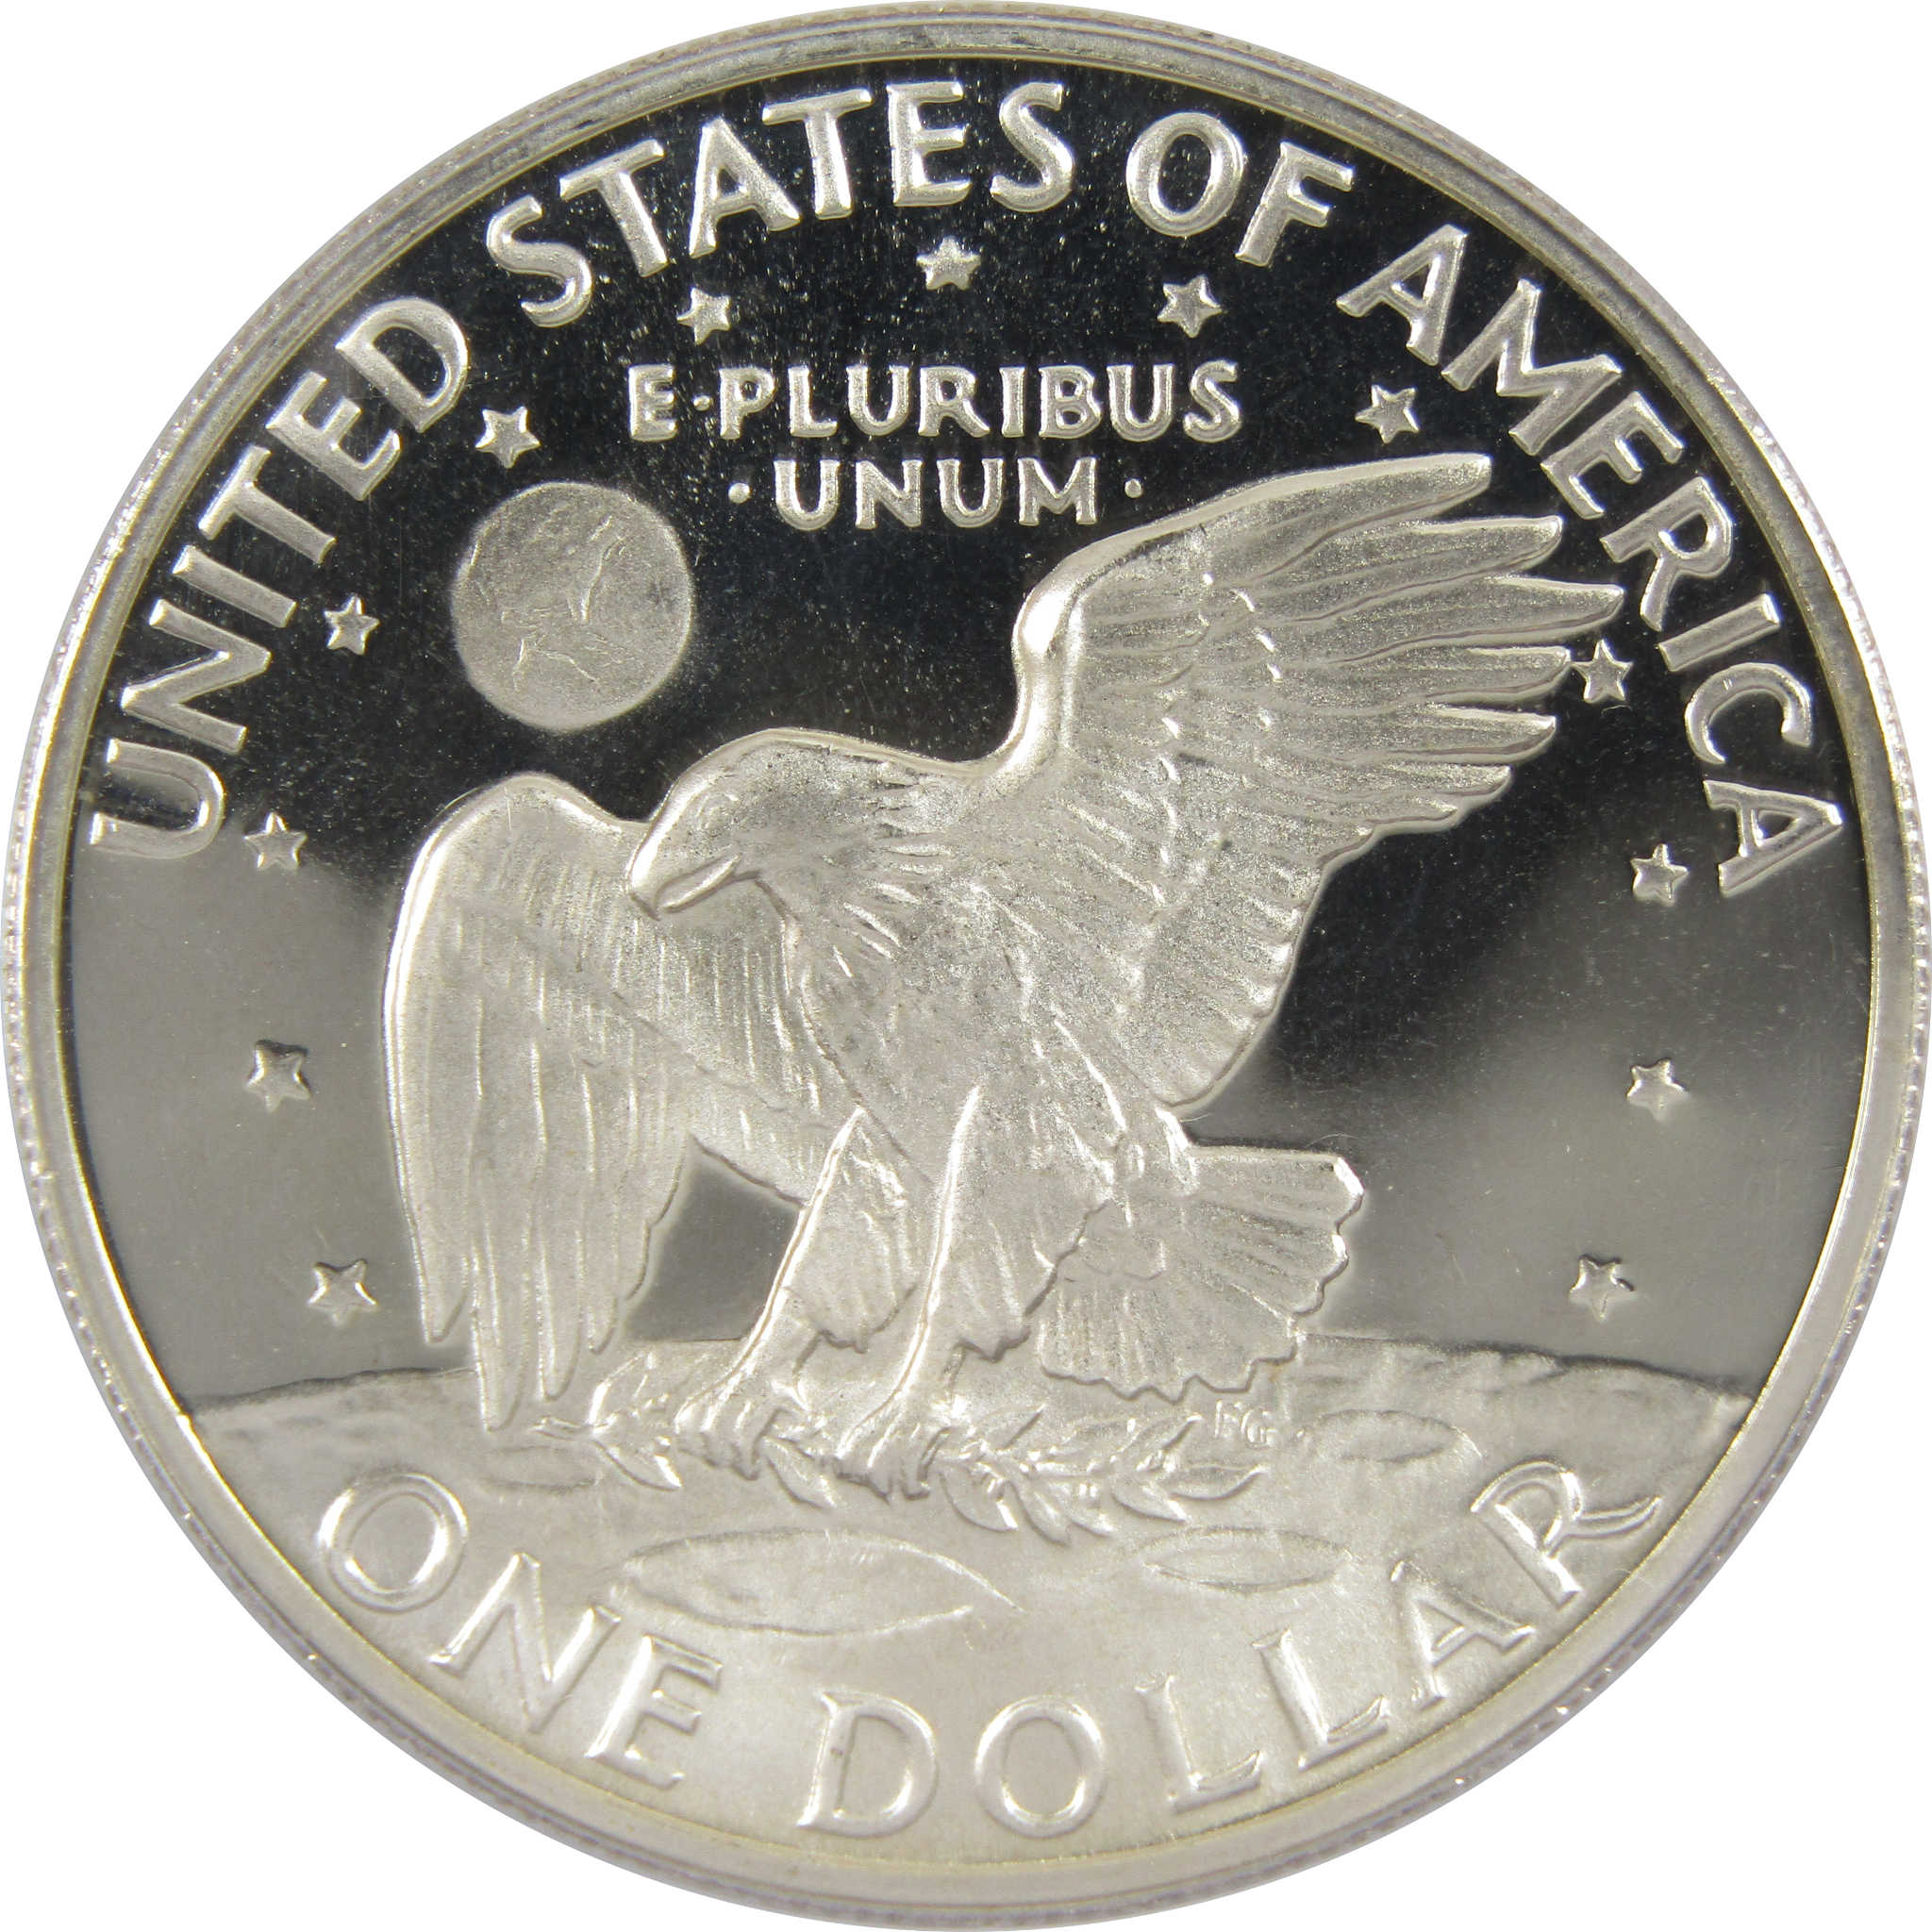 1971 S Eisenhower Dollar PR 69 DCAM PCGS 40% Silver IKE SKU:CPC3288